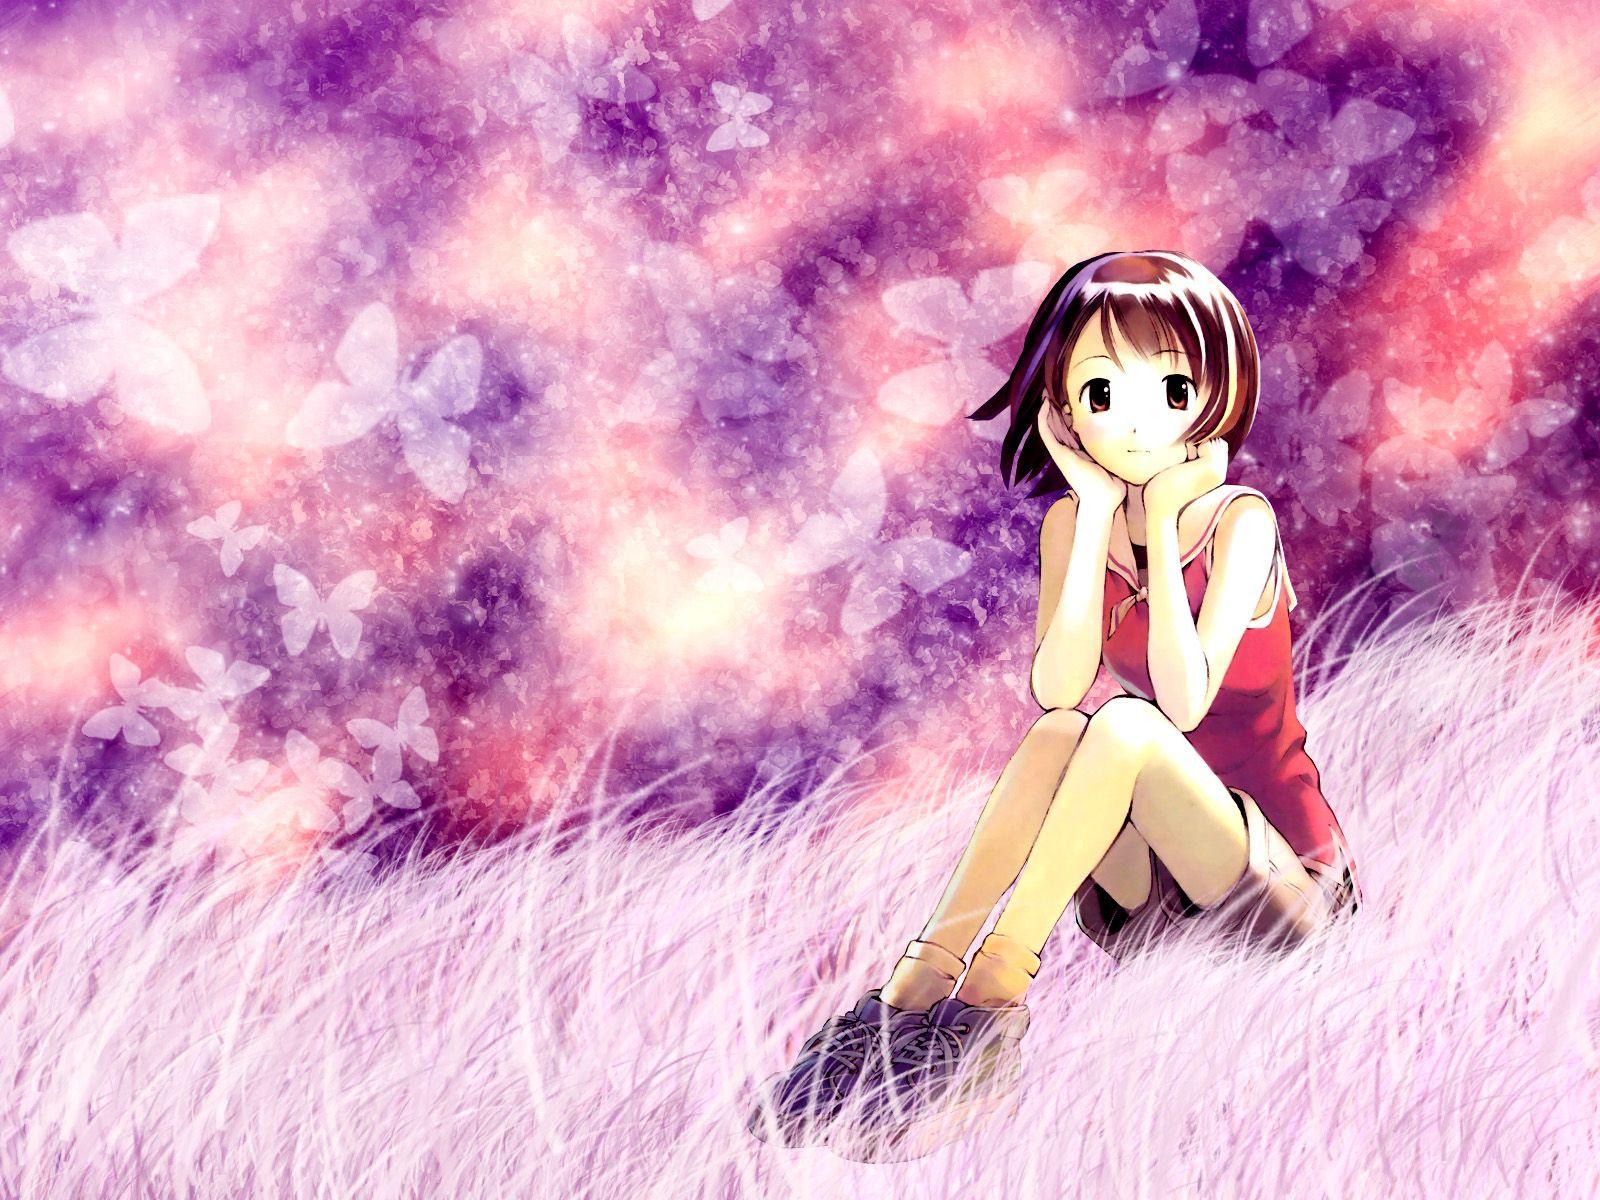 Cute Anime Girl HD Wallpaper 7. Cute anime girl wallpaper, Cute